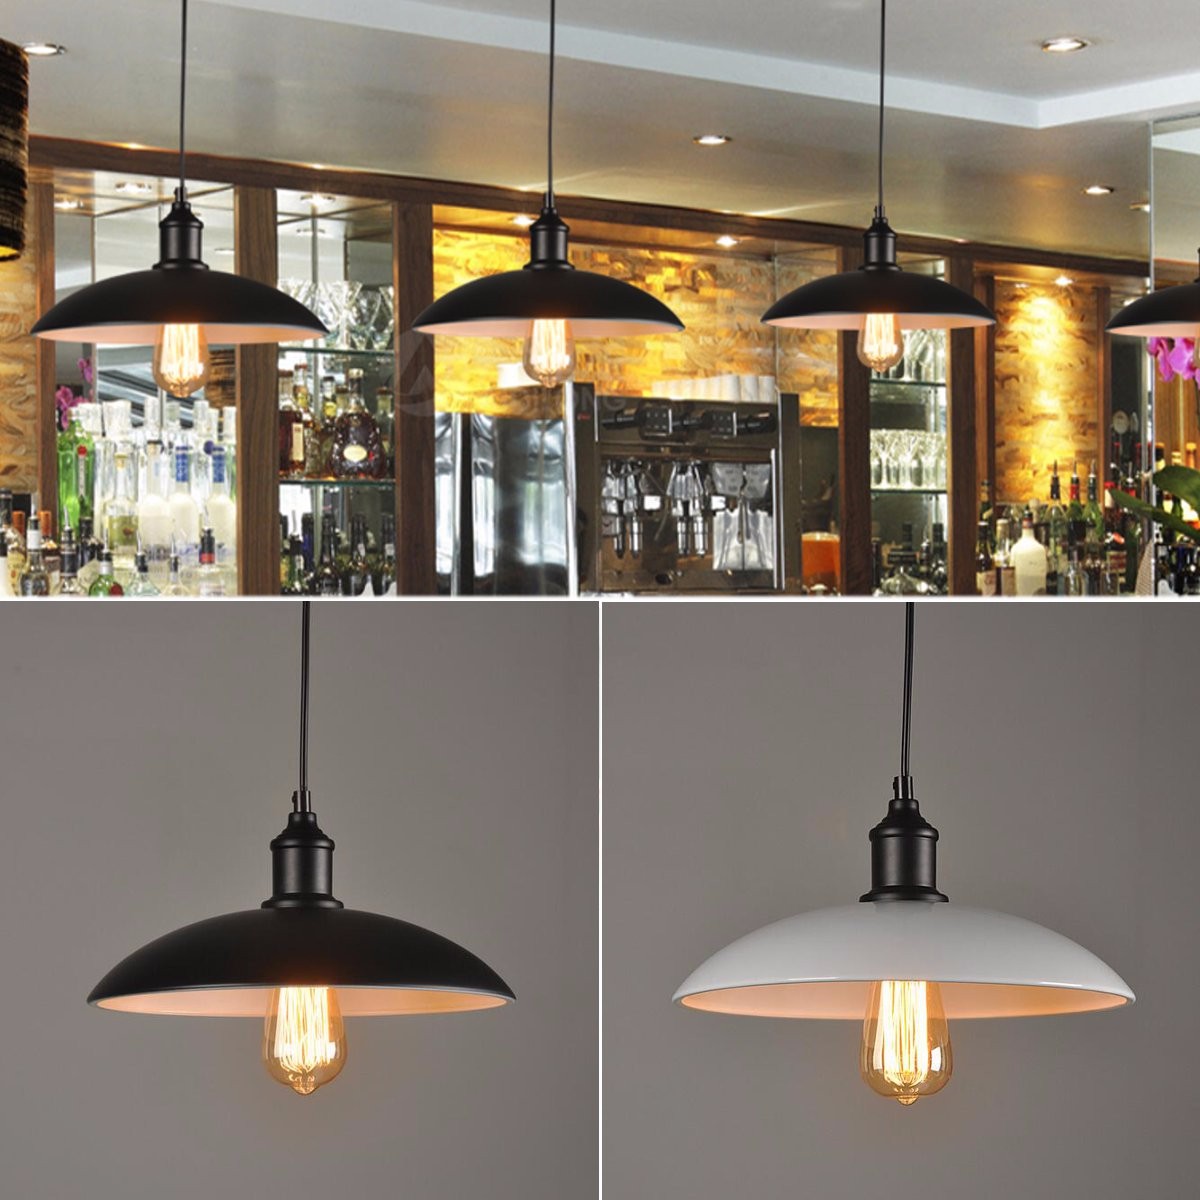 Vintage-Home-Room-Ceiling-Light-Pendant-Lamp-Fixture-Chandelier-E27-Bulb-Lampshade-Decor-1118064-4